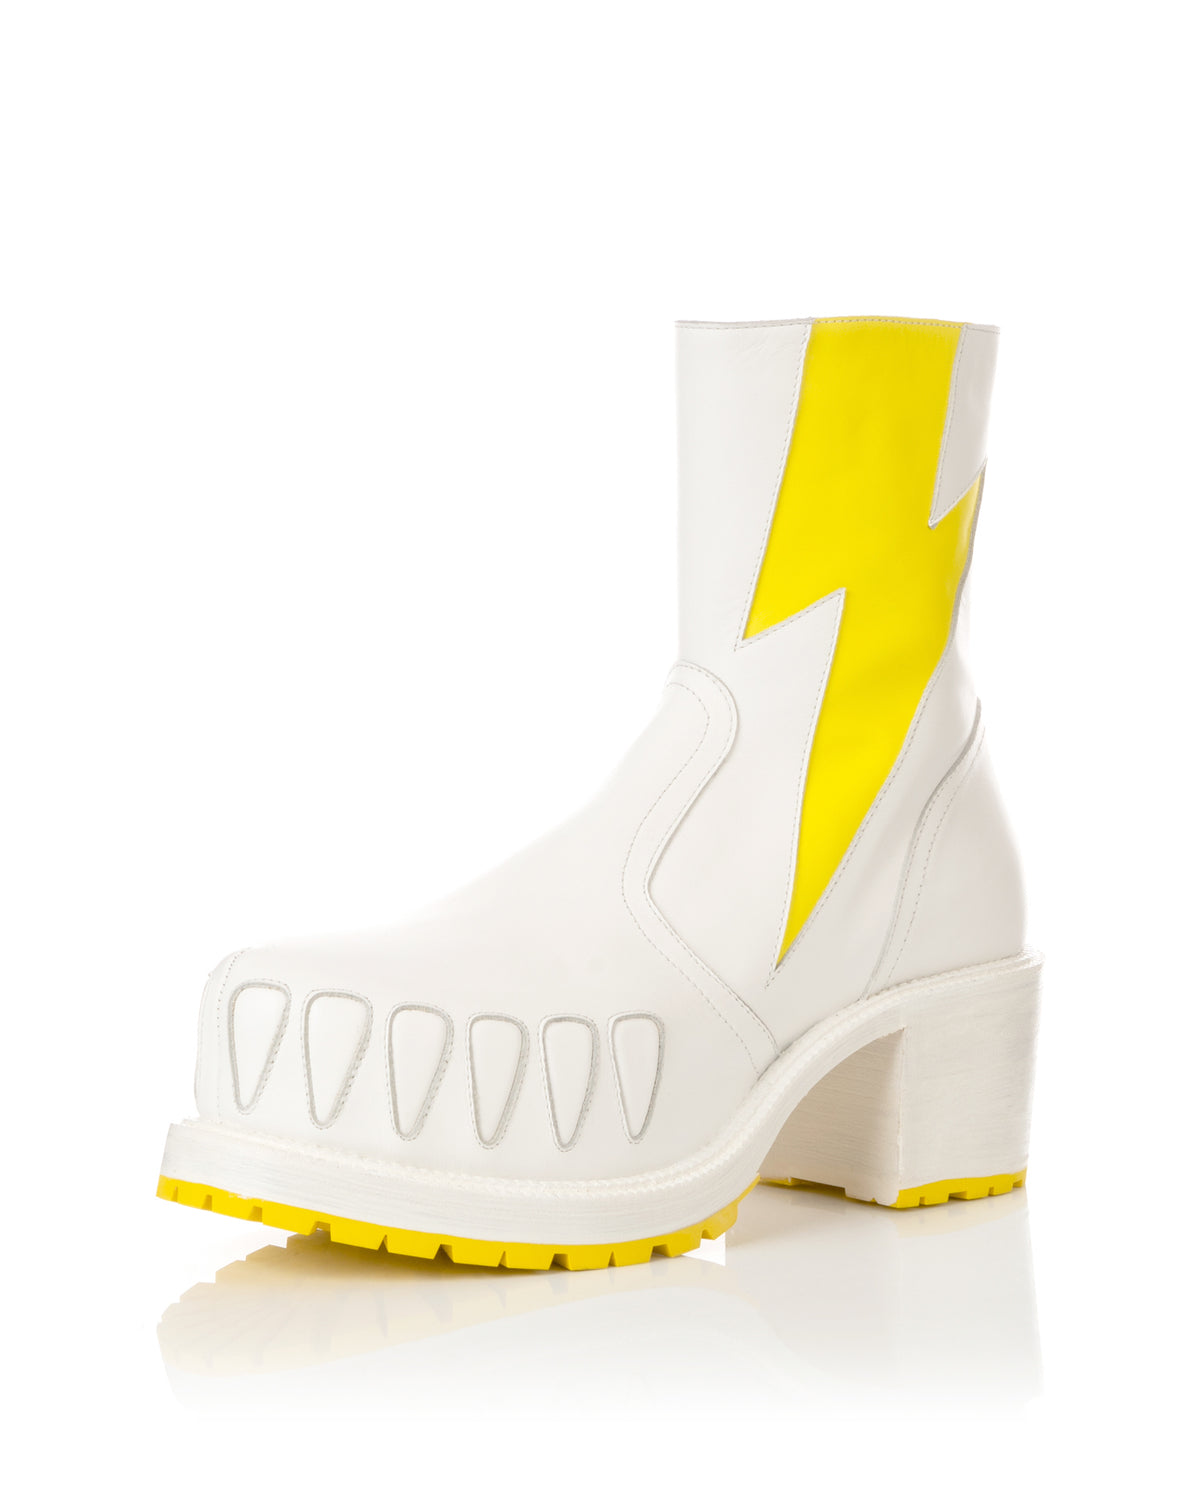 Walter Van Beirendonck | Hyper Glam Boots Off White / Yellow - Concrete